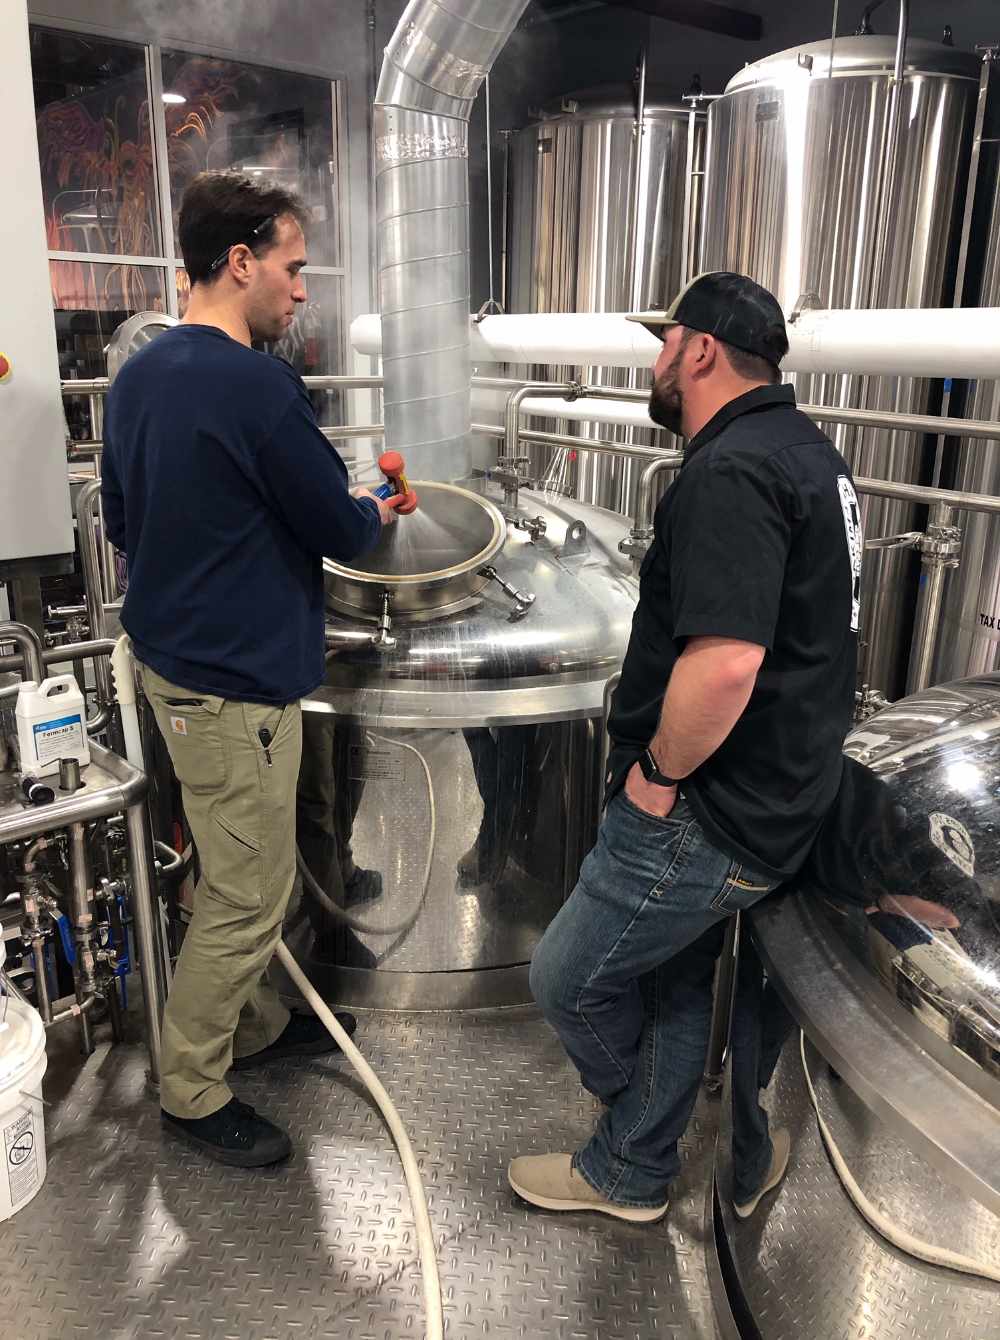 State 48 Brewery – Arizona Craft Brewers Guild